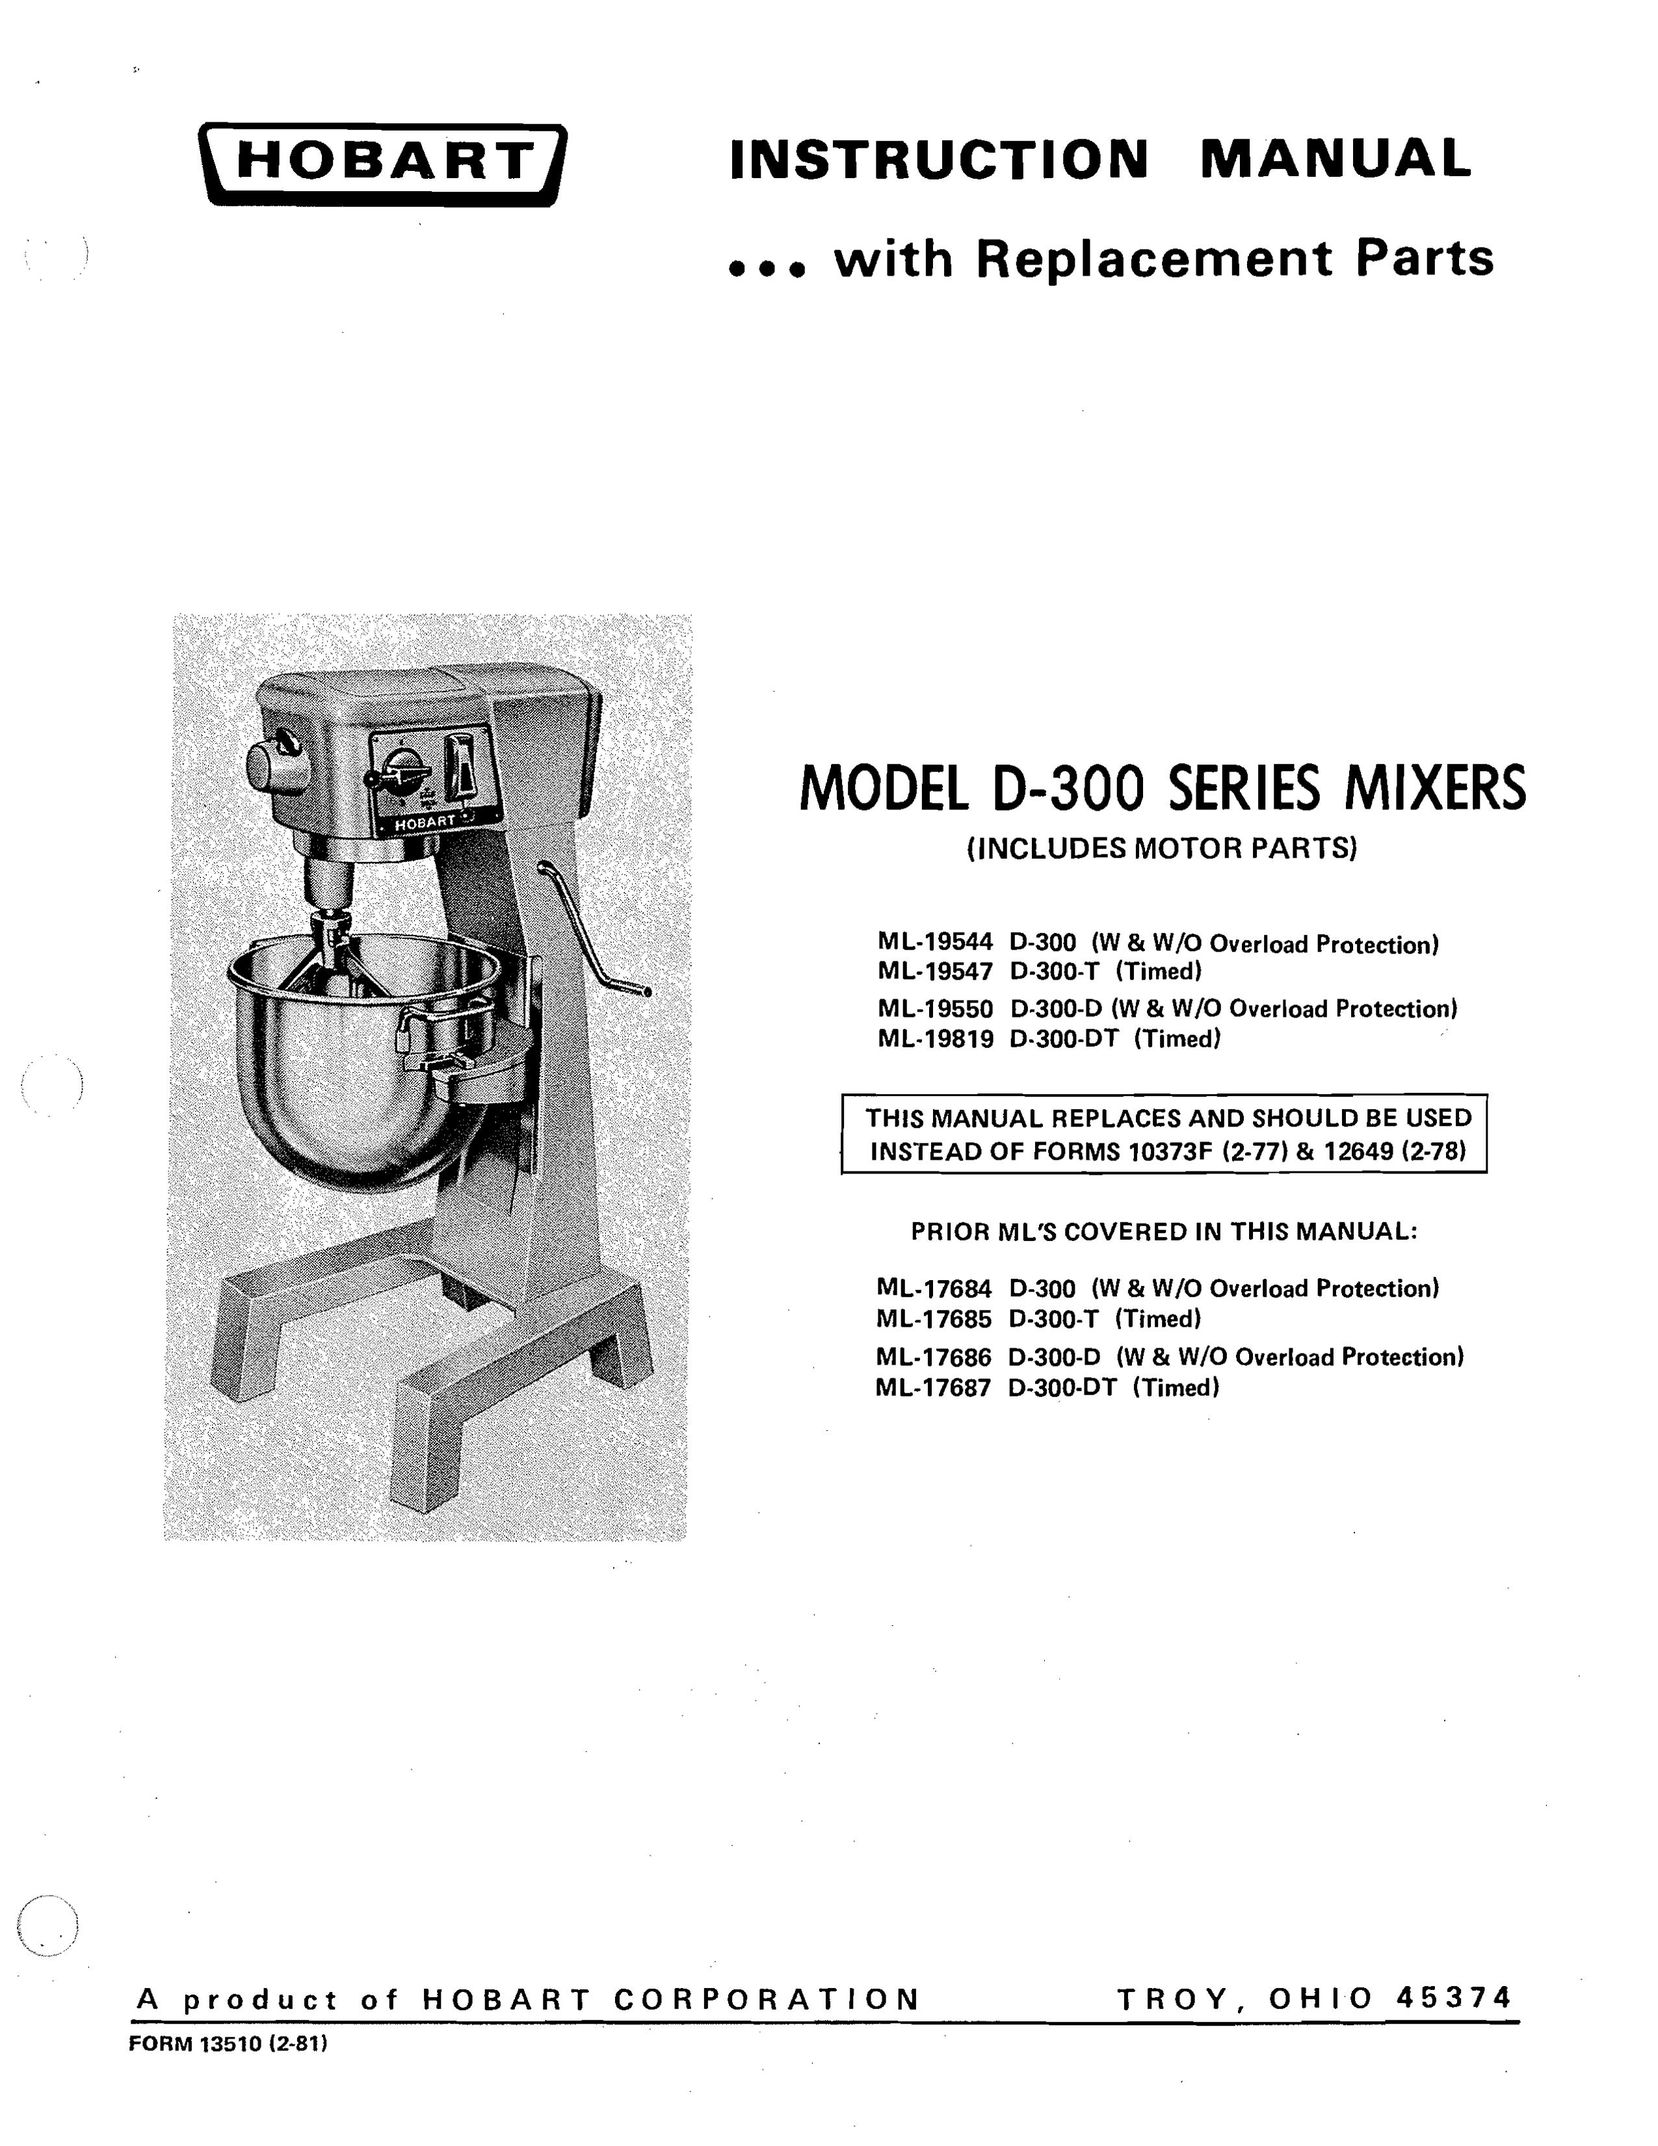 Hobart D-300 Mixer User Manual